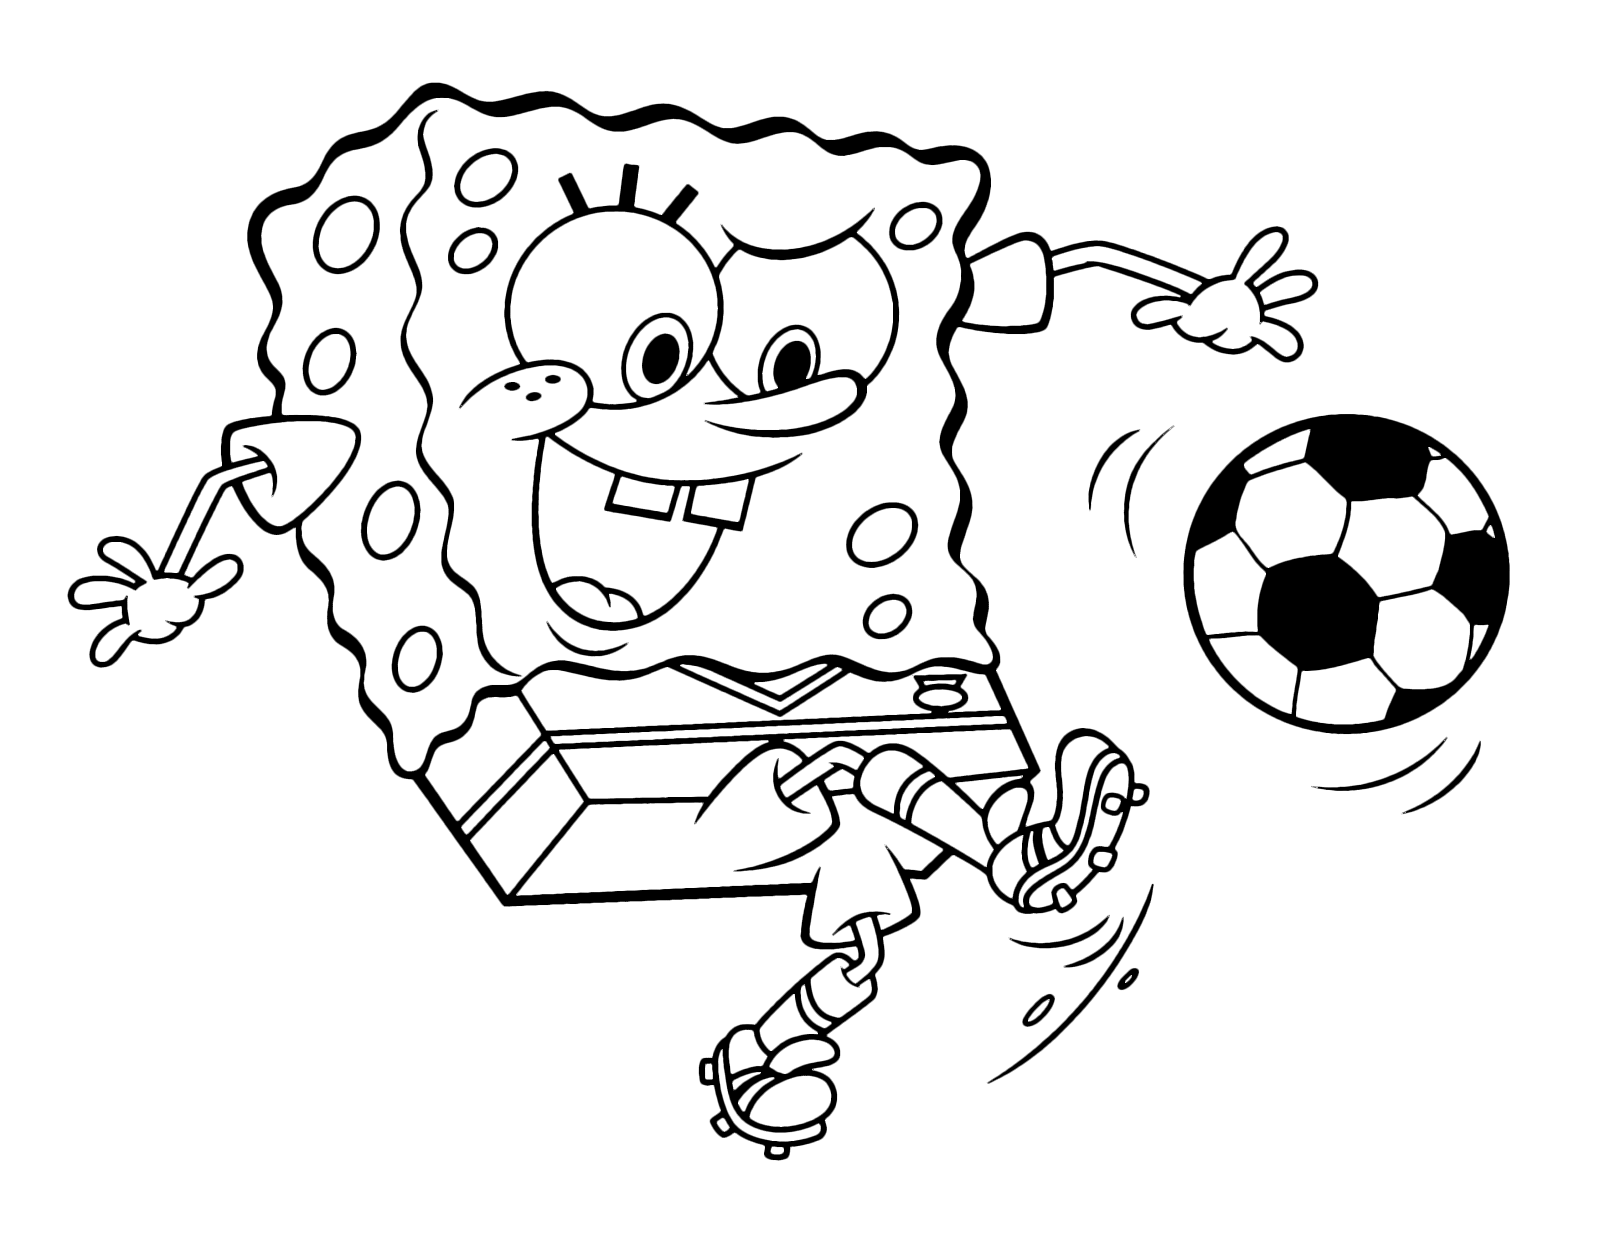 SpongeBob - SpongeBob plays football